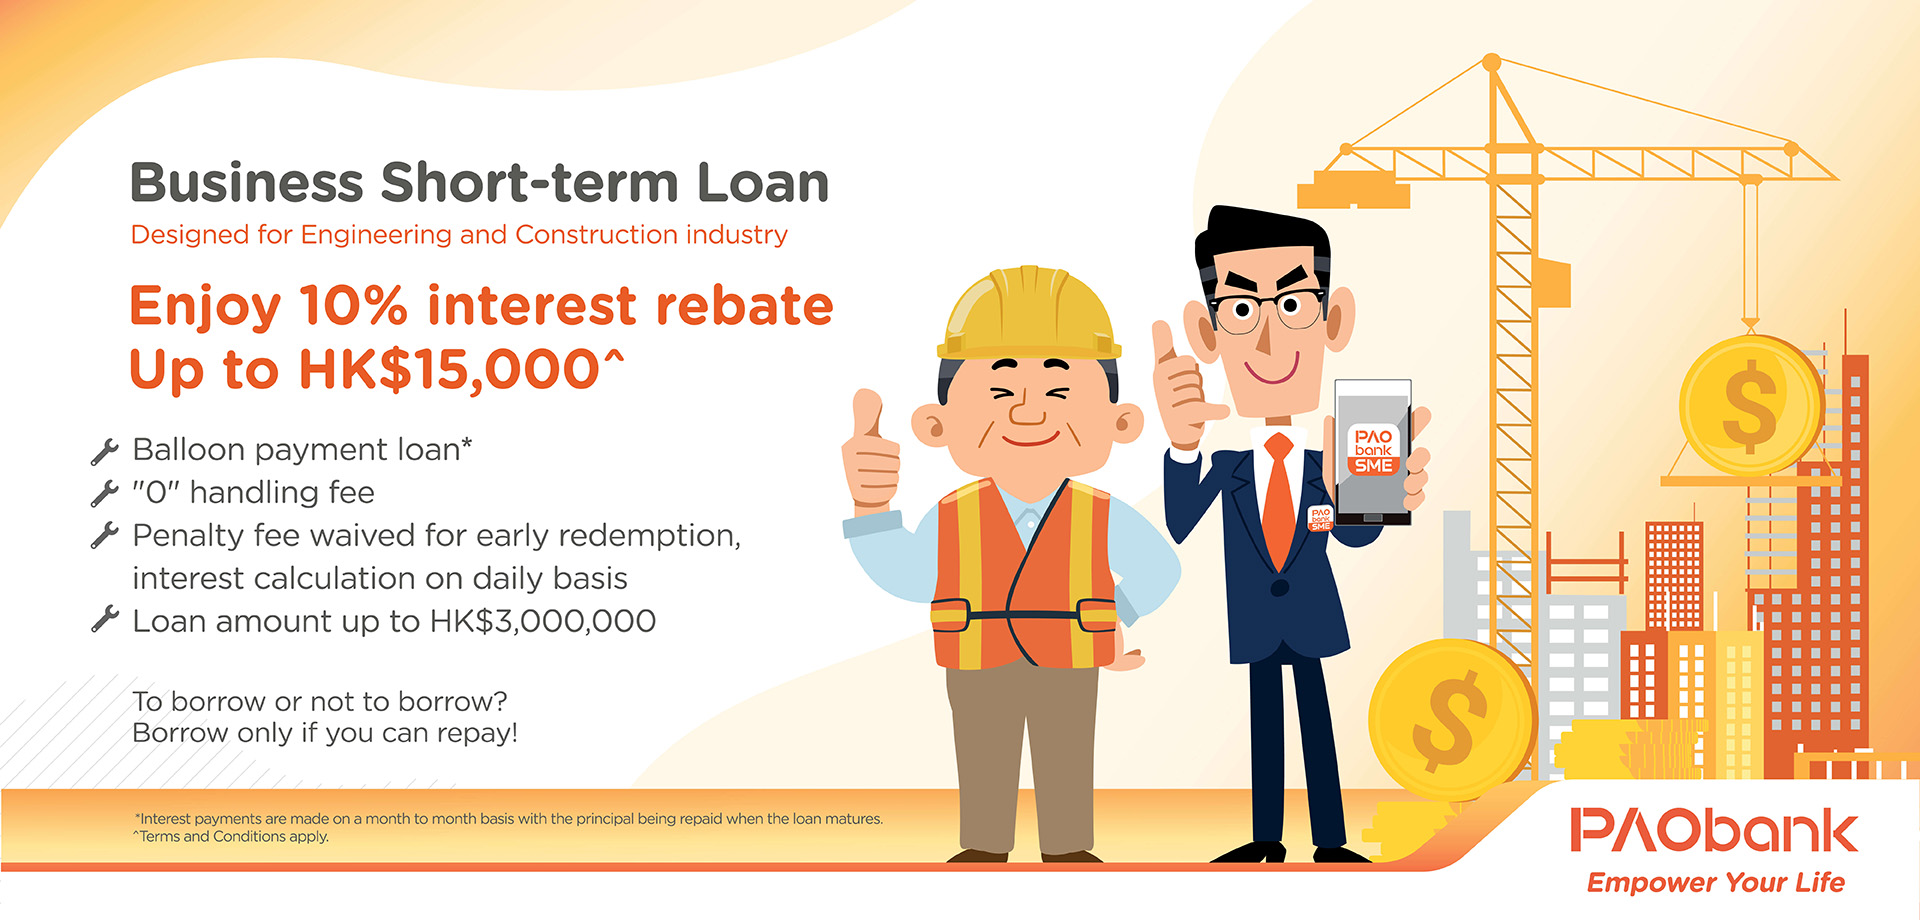 PAOB SME Services - PAOB Business Short-term Loan